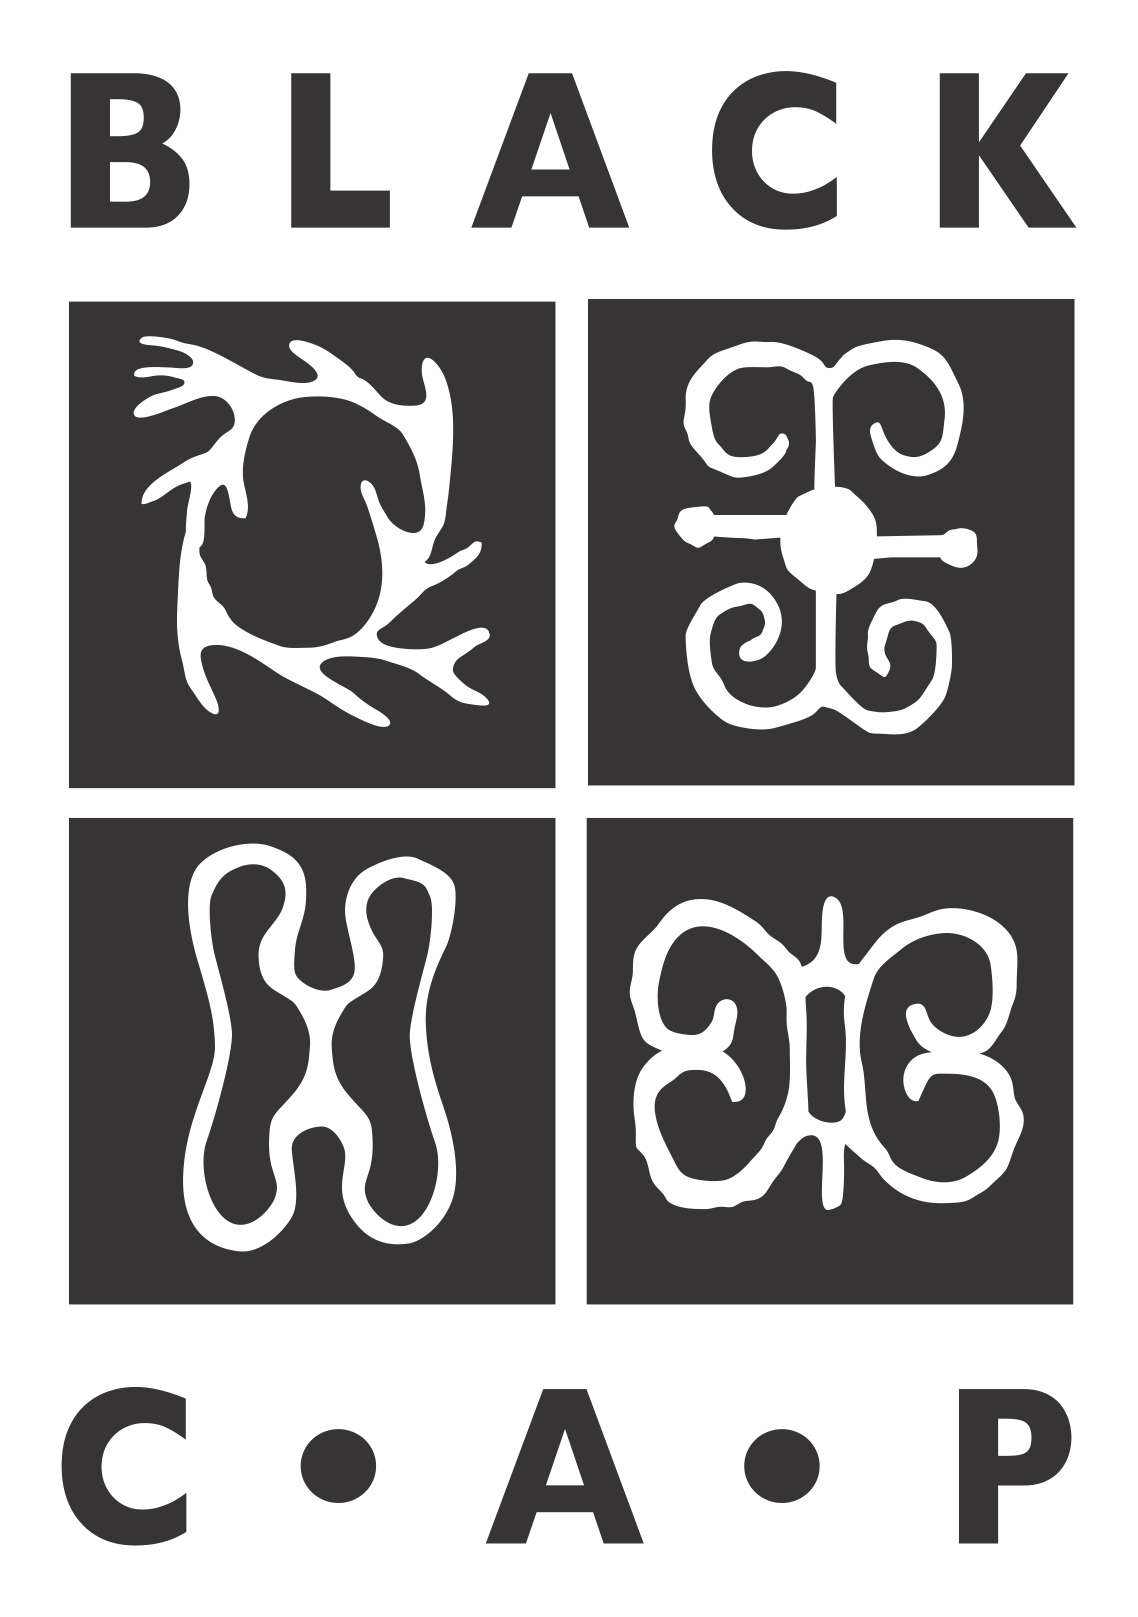 presence-logo